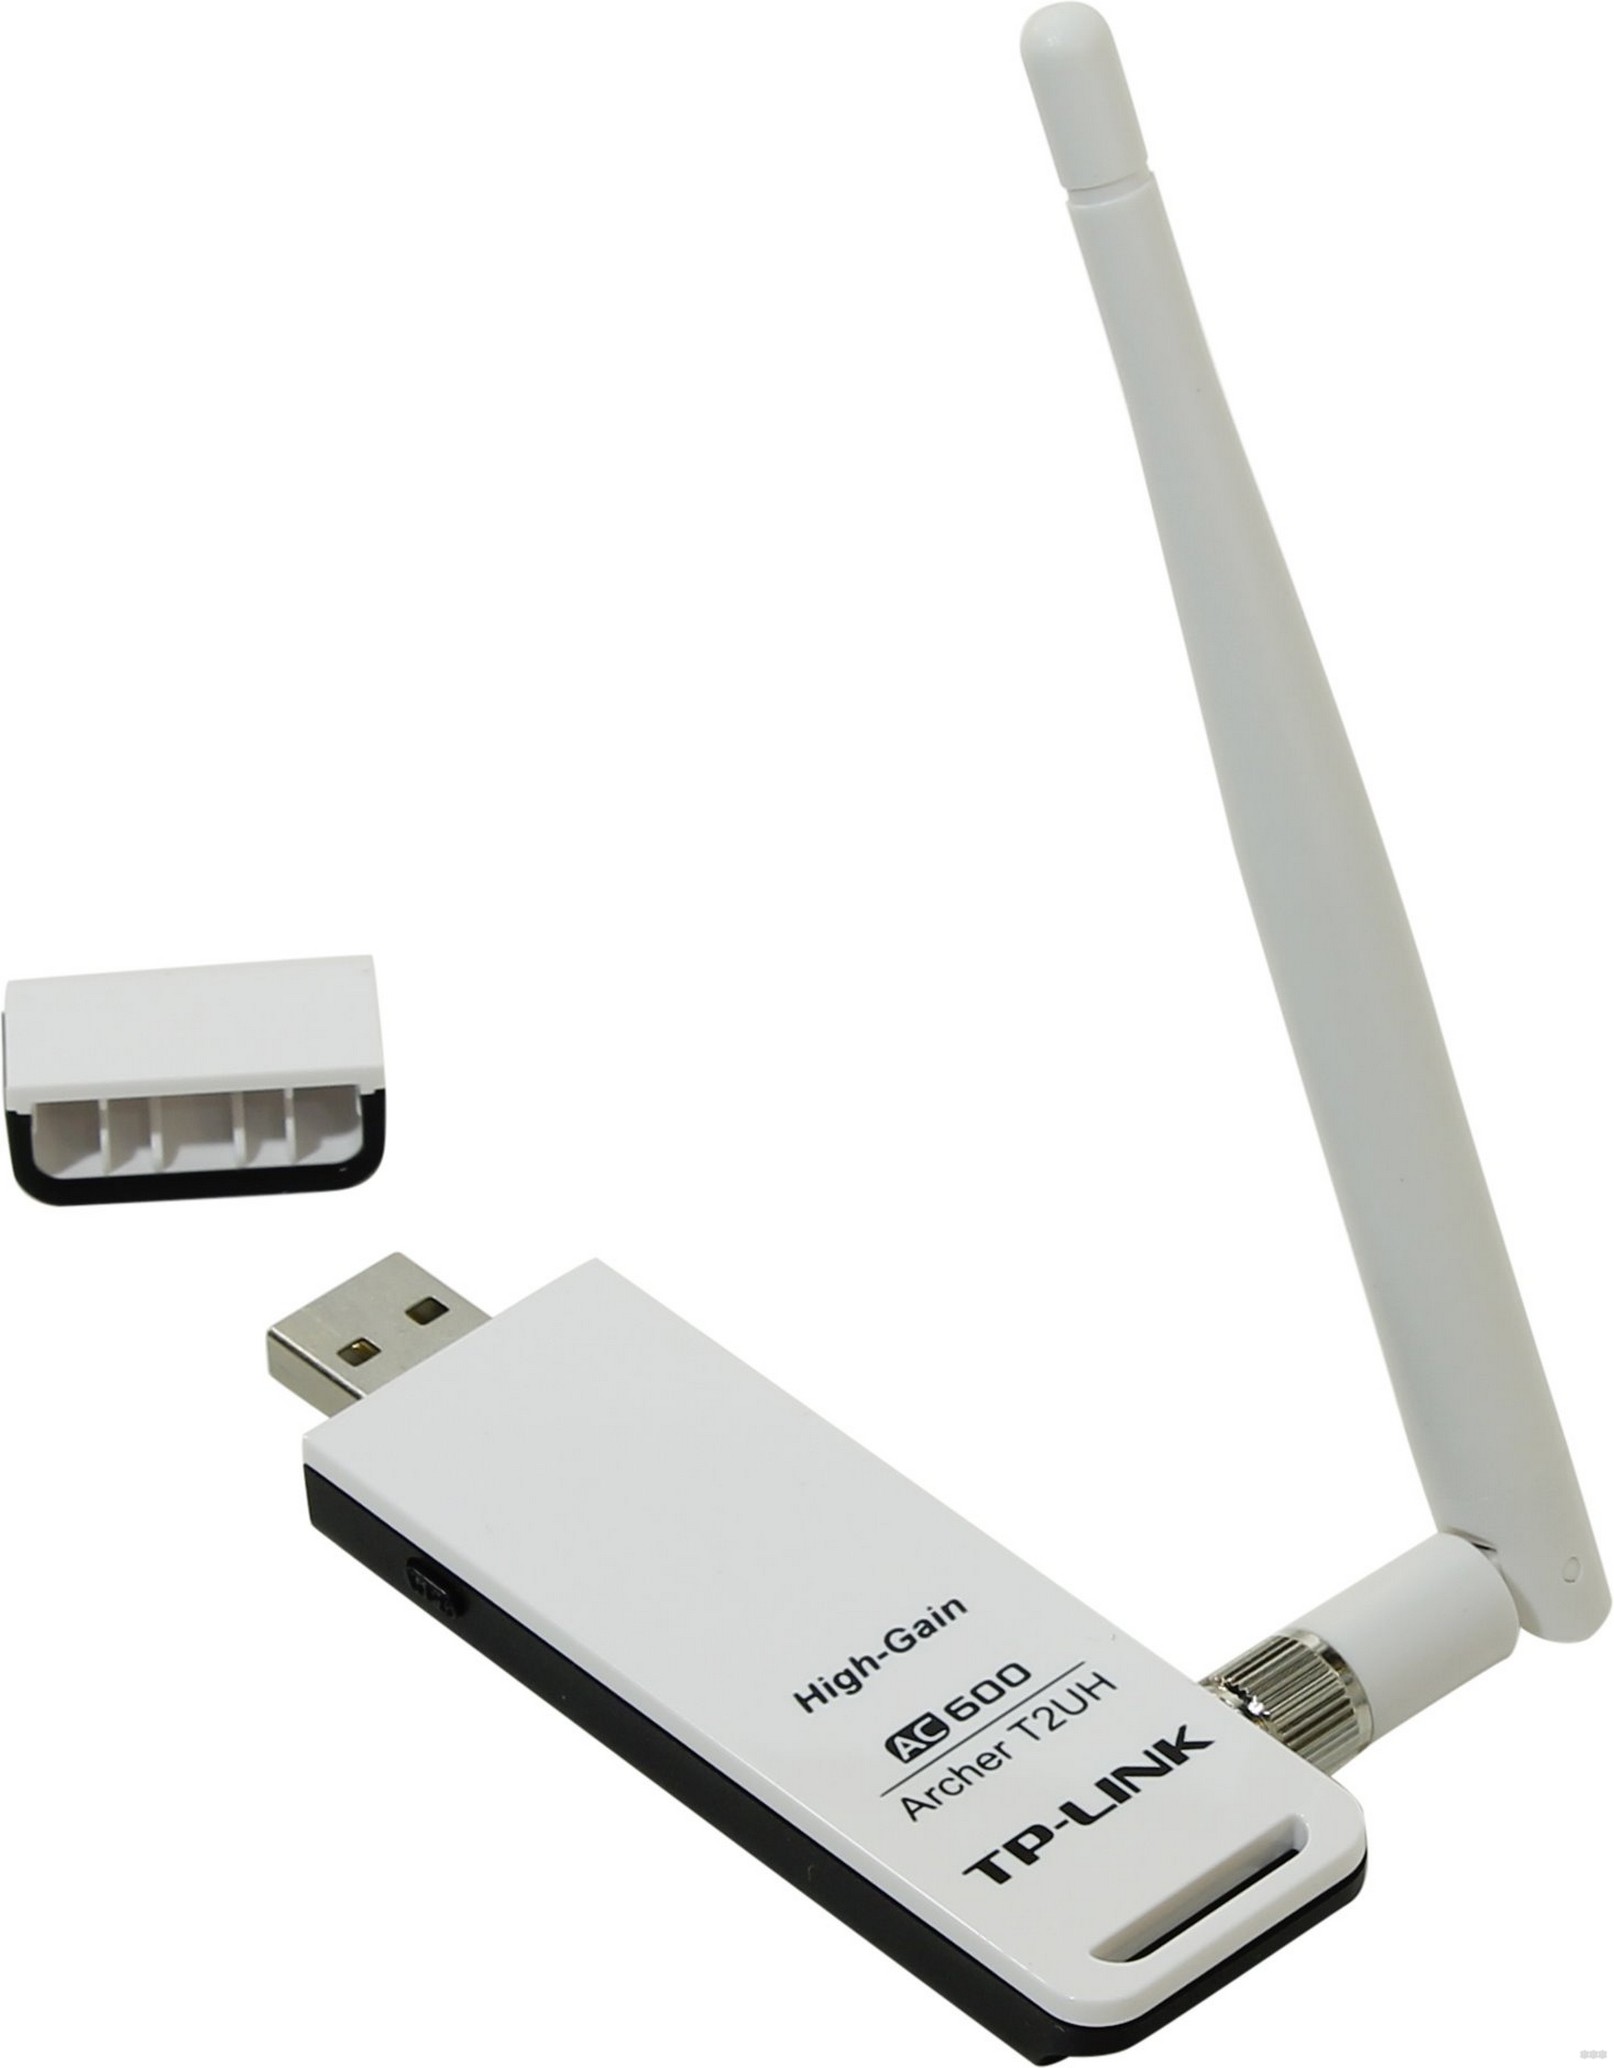 Описание и подключение Wi-Fi адаптера TP-Link Archer T2UH AC600